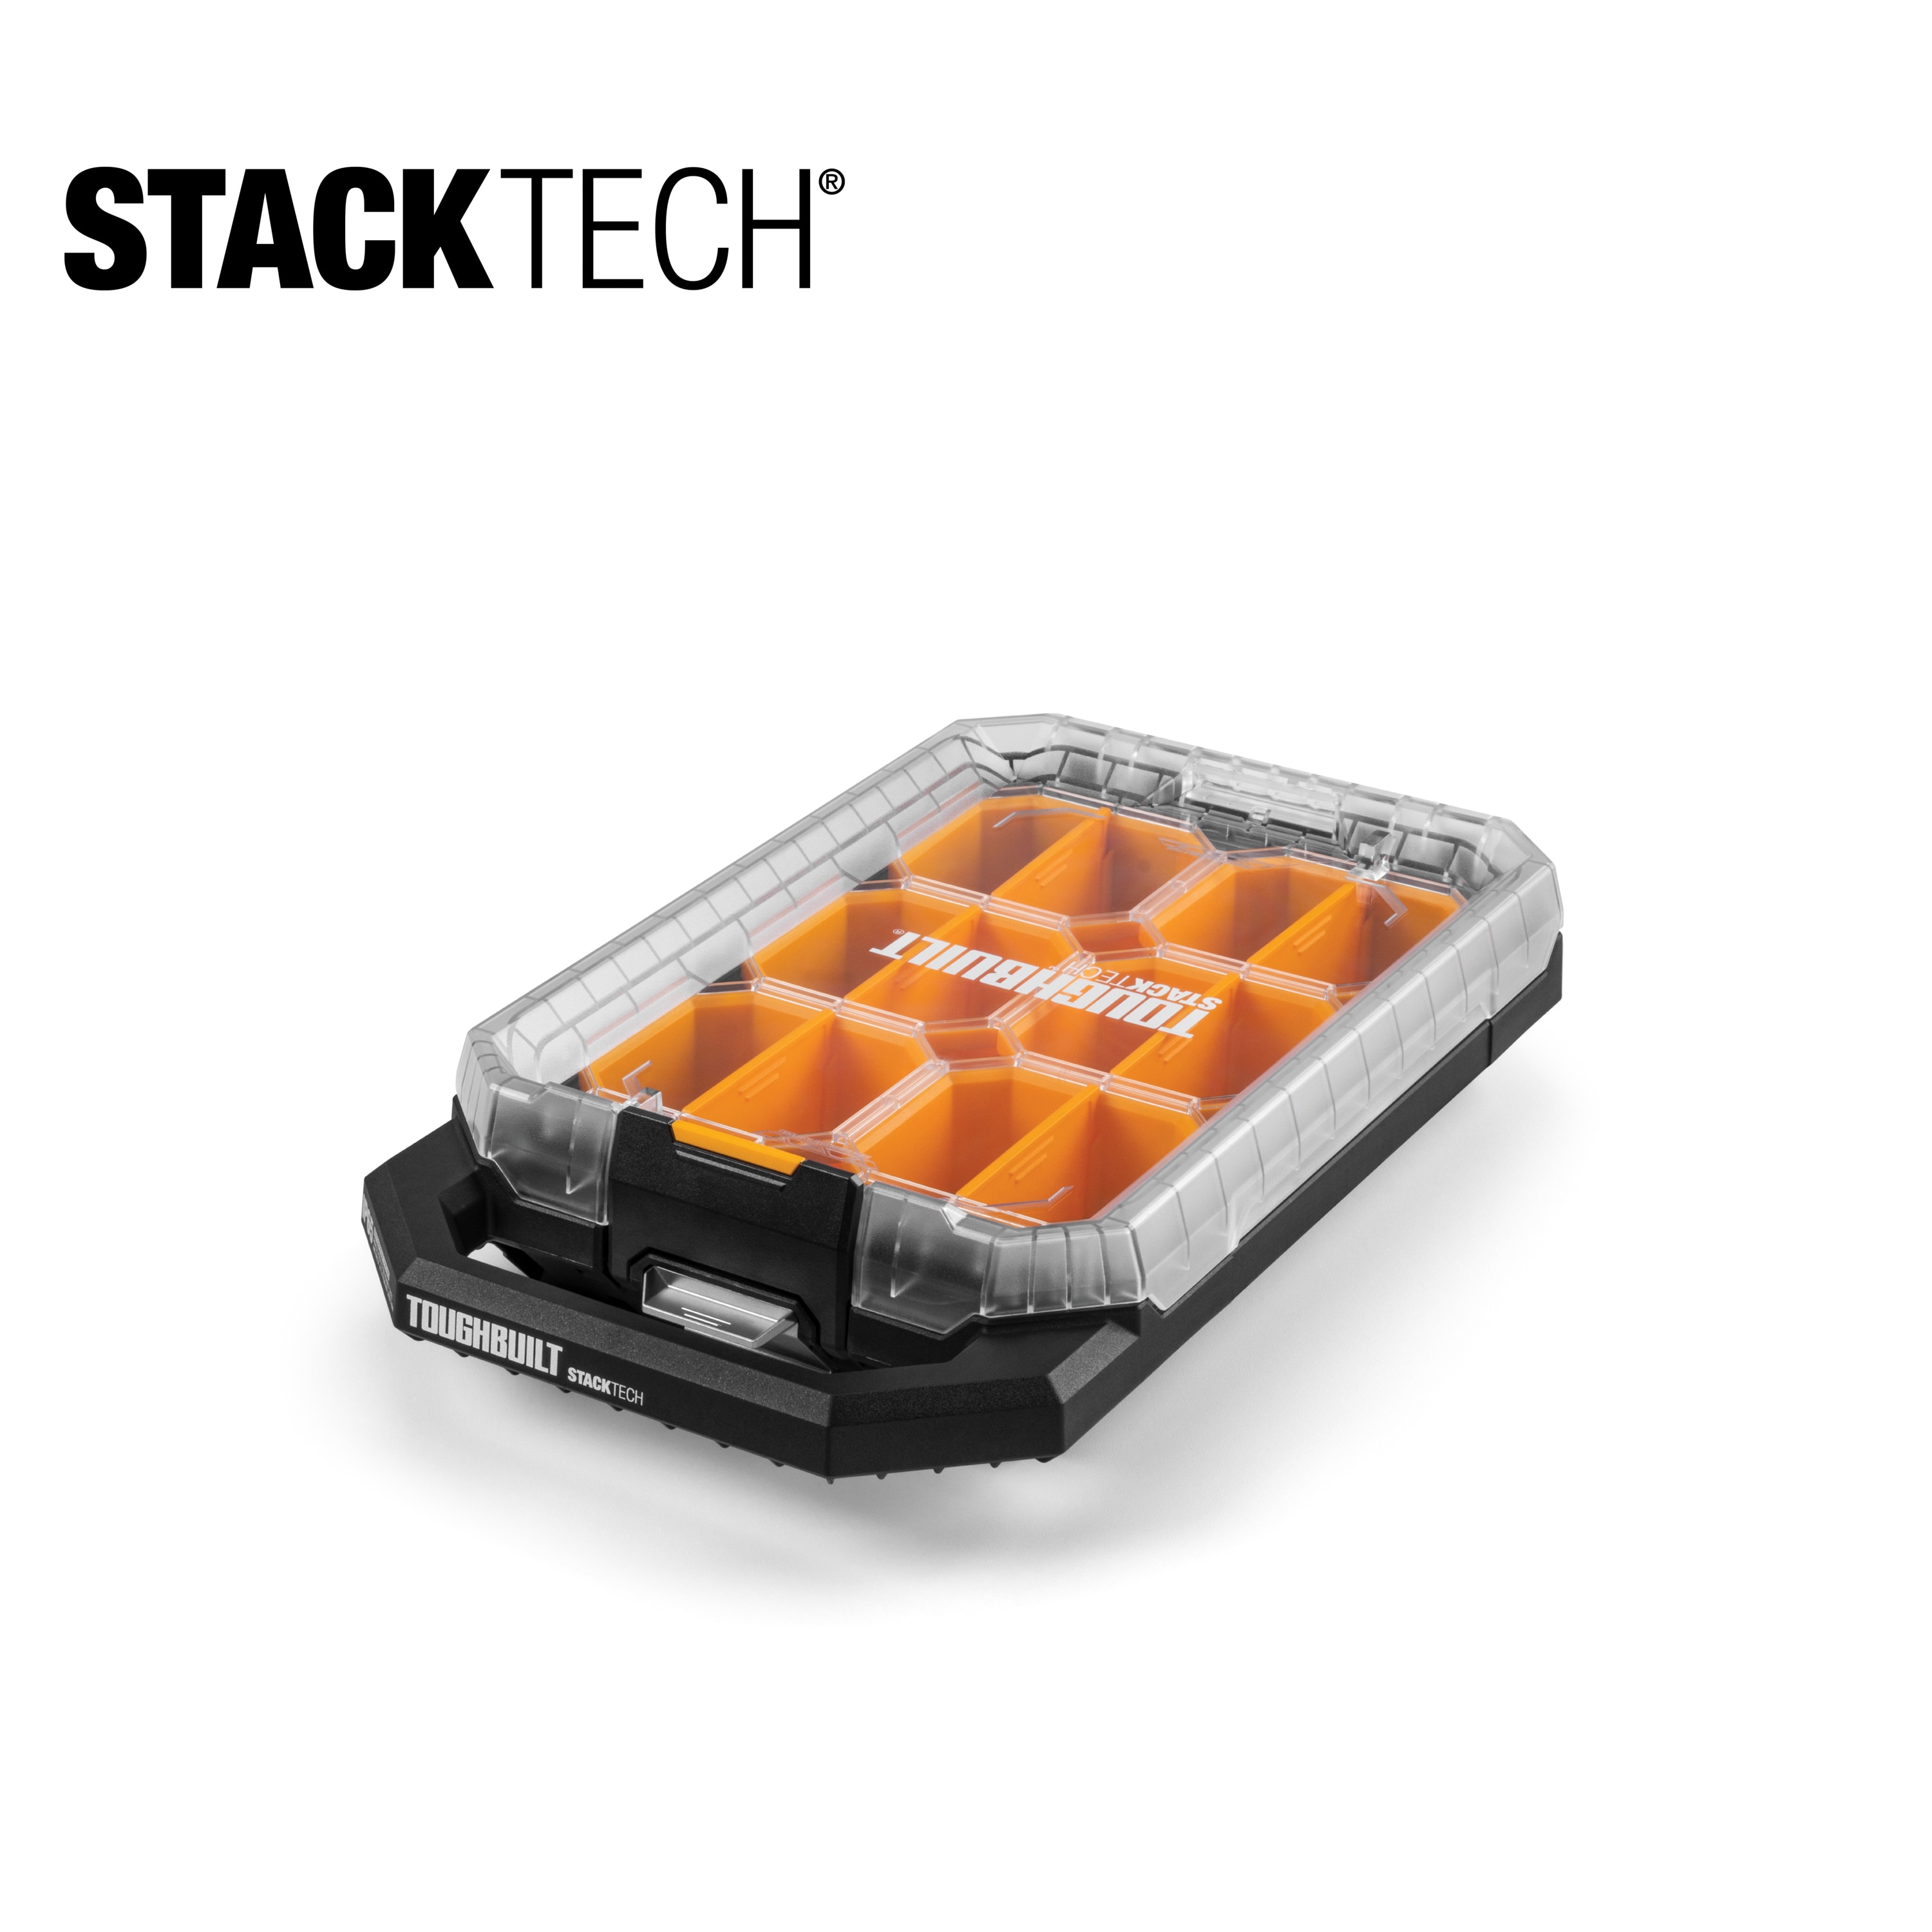 TOUGHBUILT STACKTECH Compact Low-Profile 12-Compartment Plastic